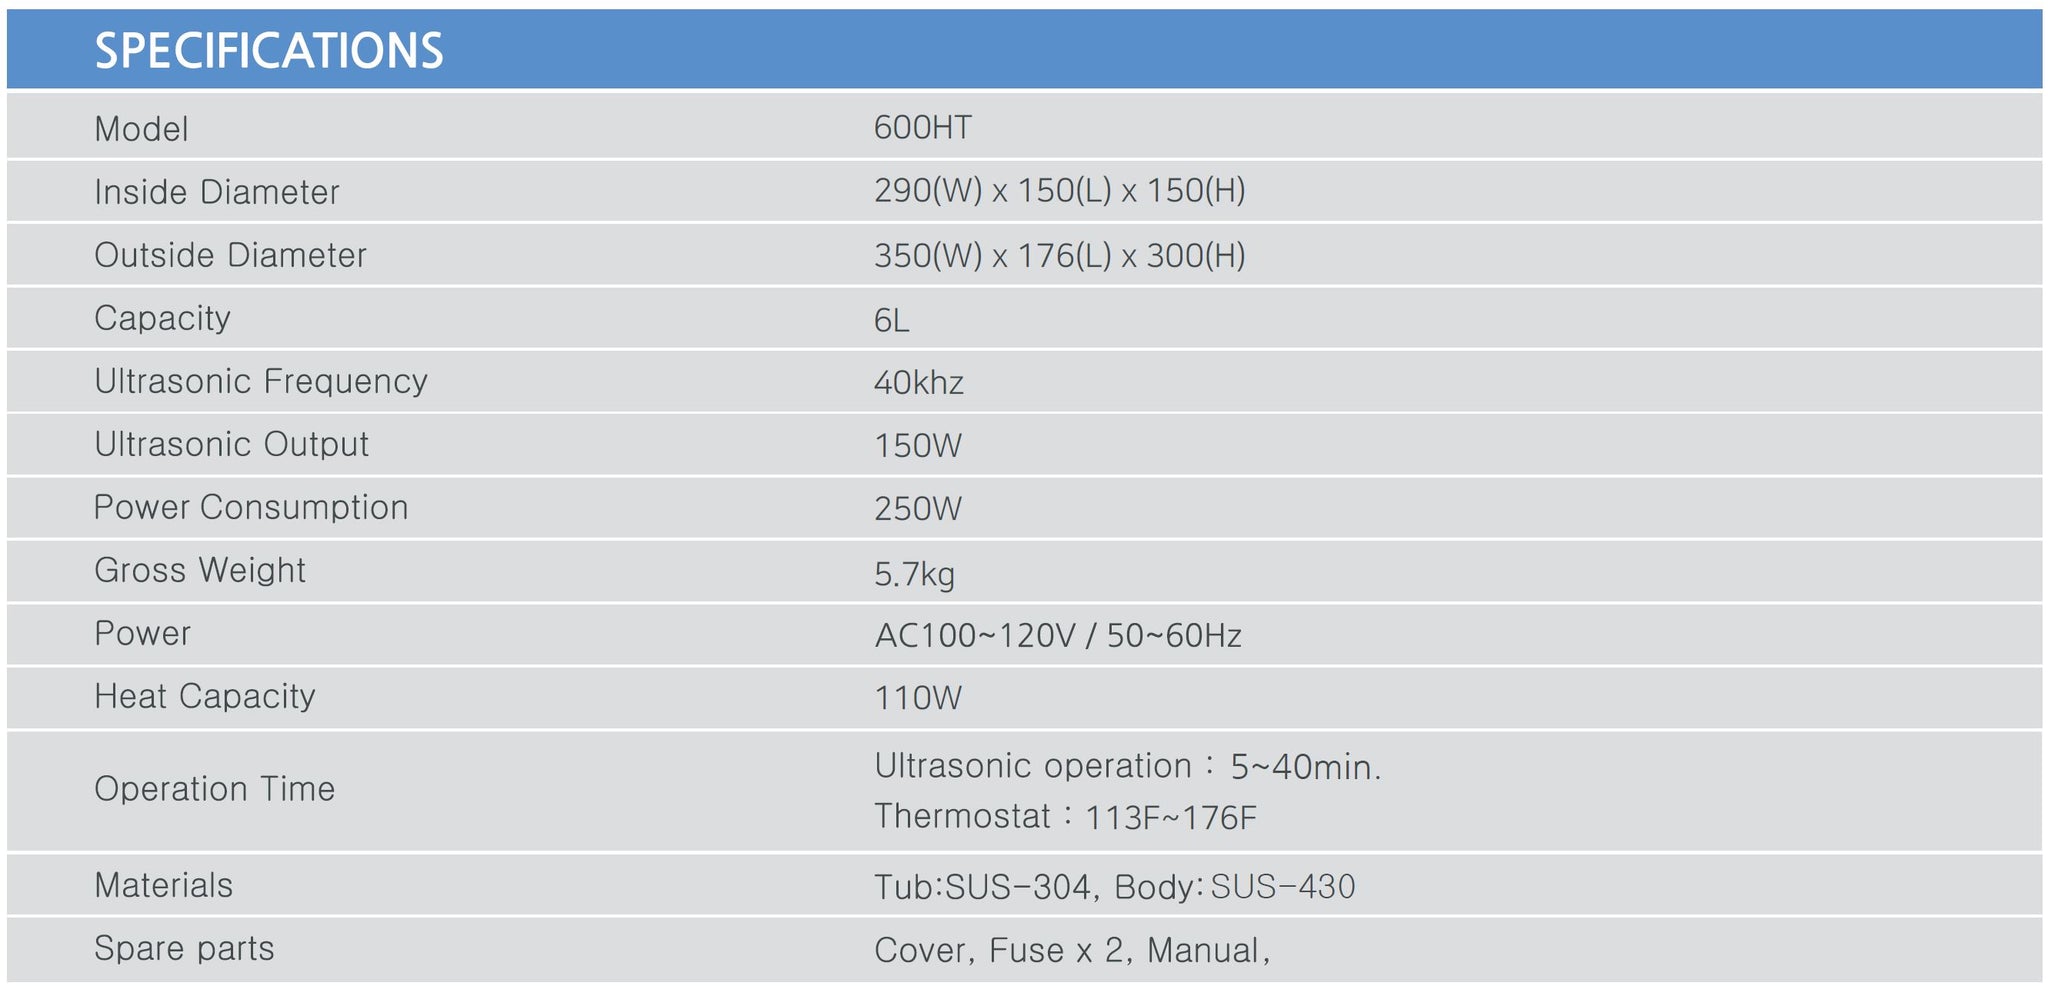 BestBuilt® Ultrasonic Cleaning Machine 23.25 Qt.